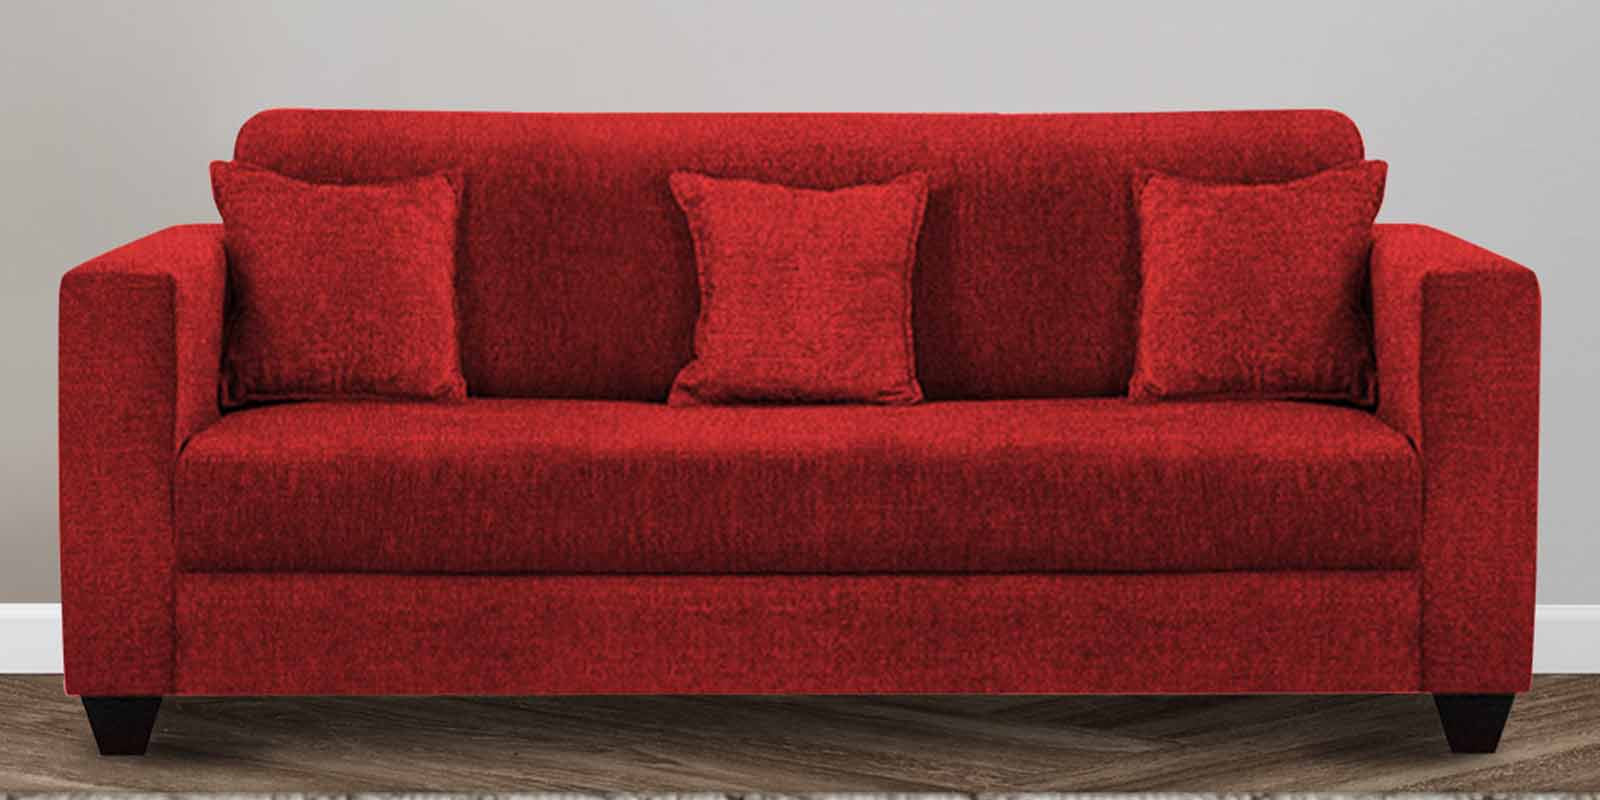 Nebula Fabric 3 Seater Sofa in Blood Maroon Colour